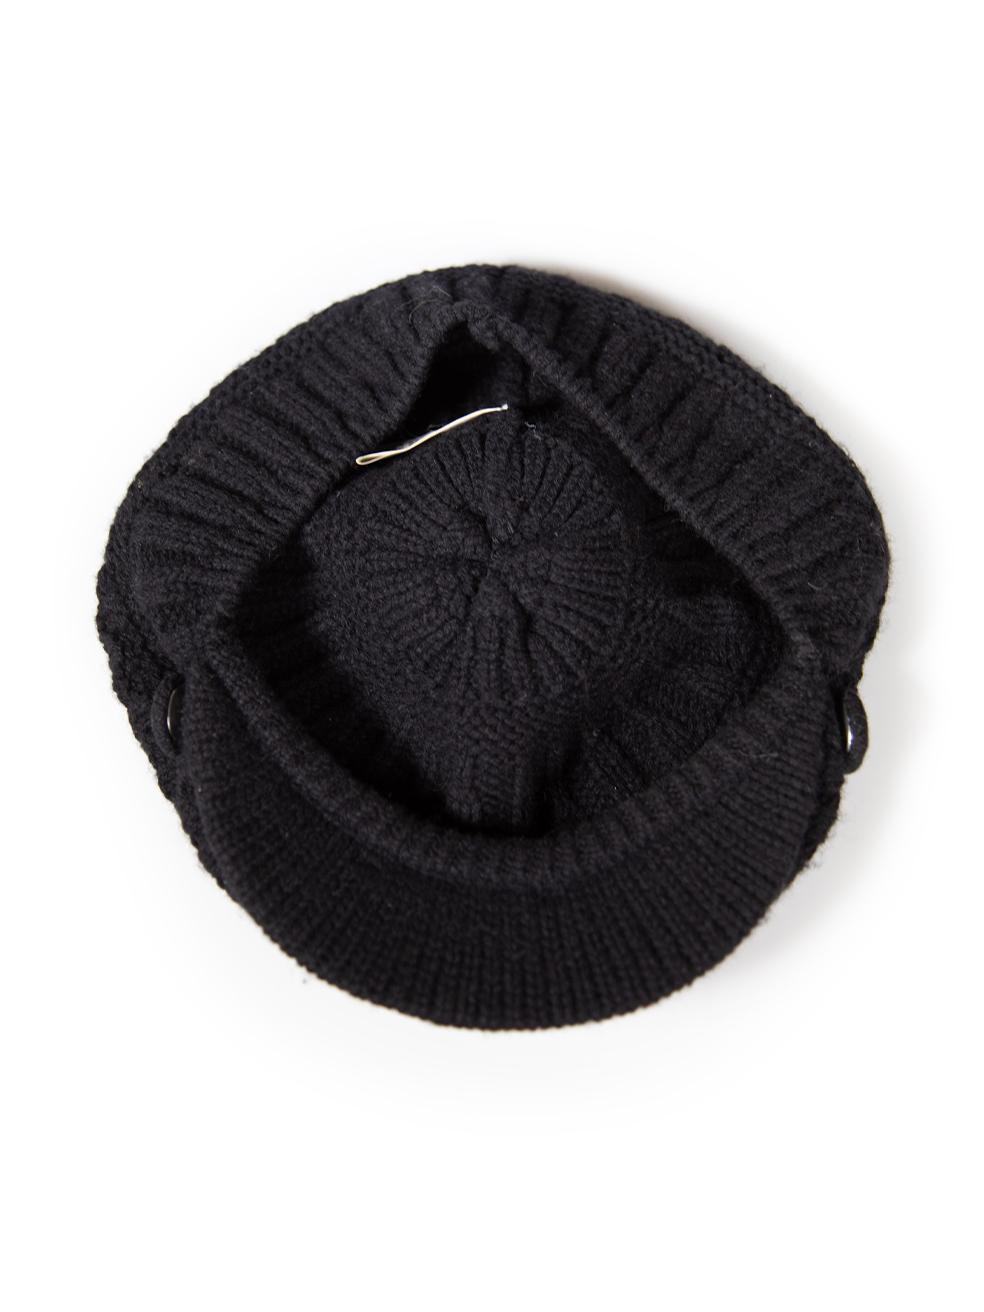 Women's Yohji Yamamoto Black Wool Pom Pom Knit Hat